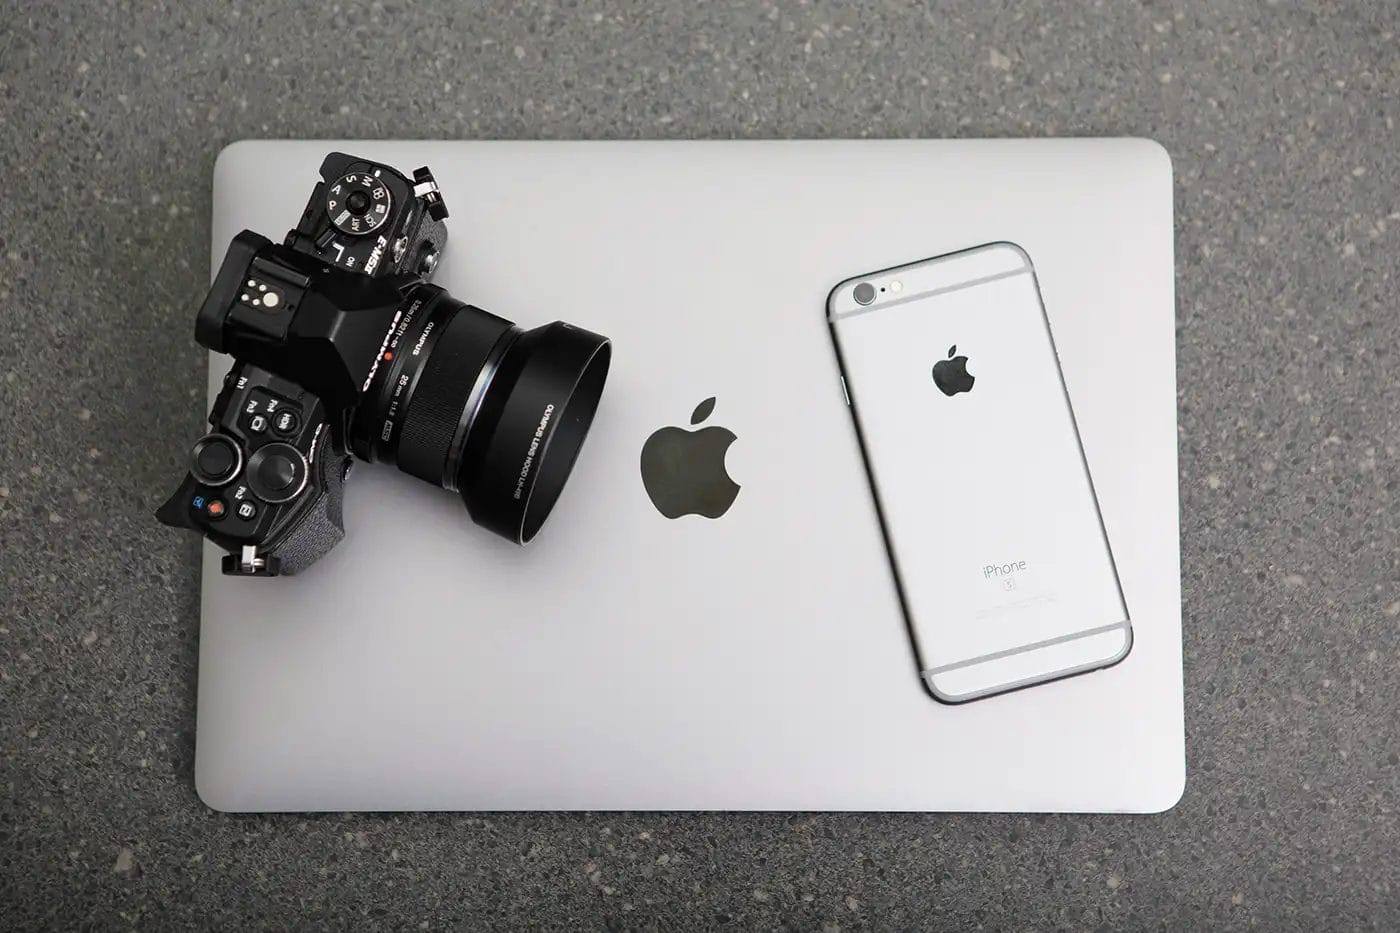 a digital camera next to an iphone facing down on top of an apple mac laptop